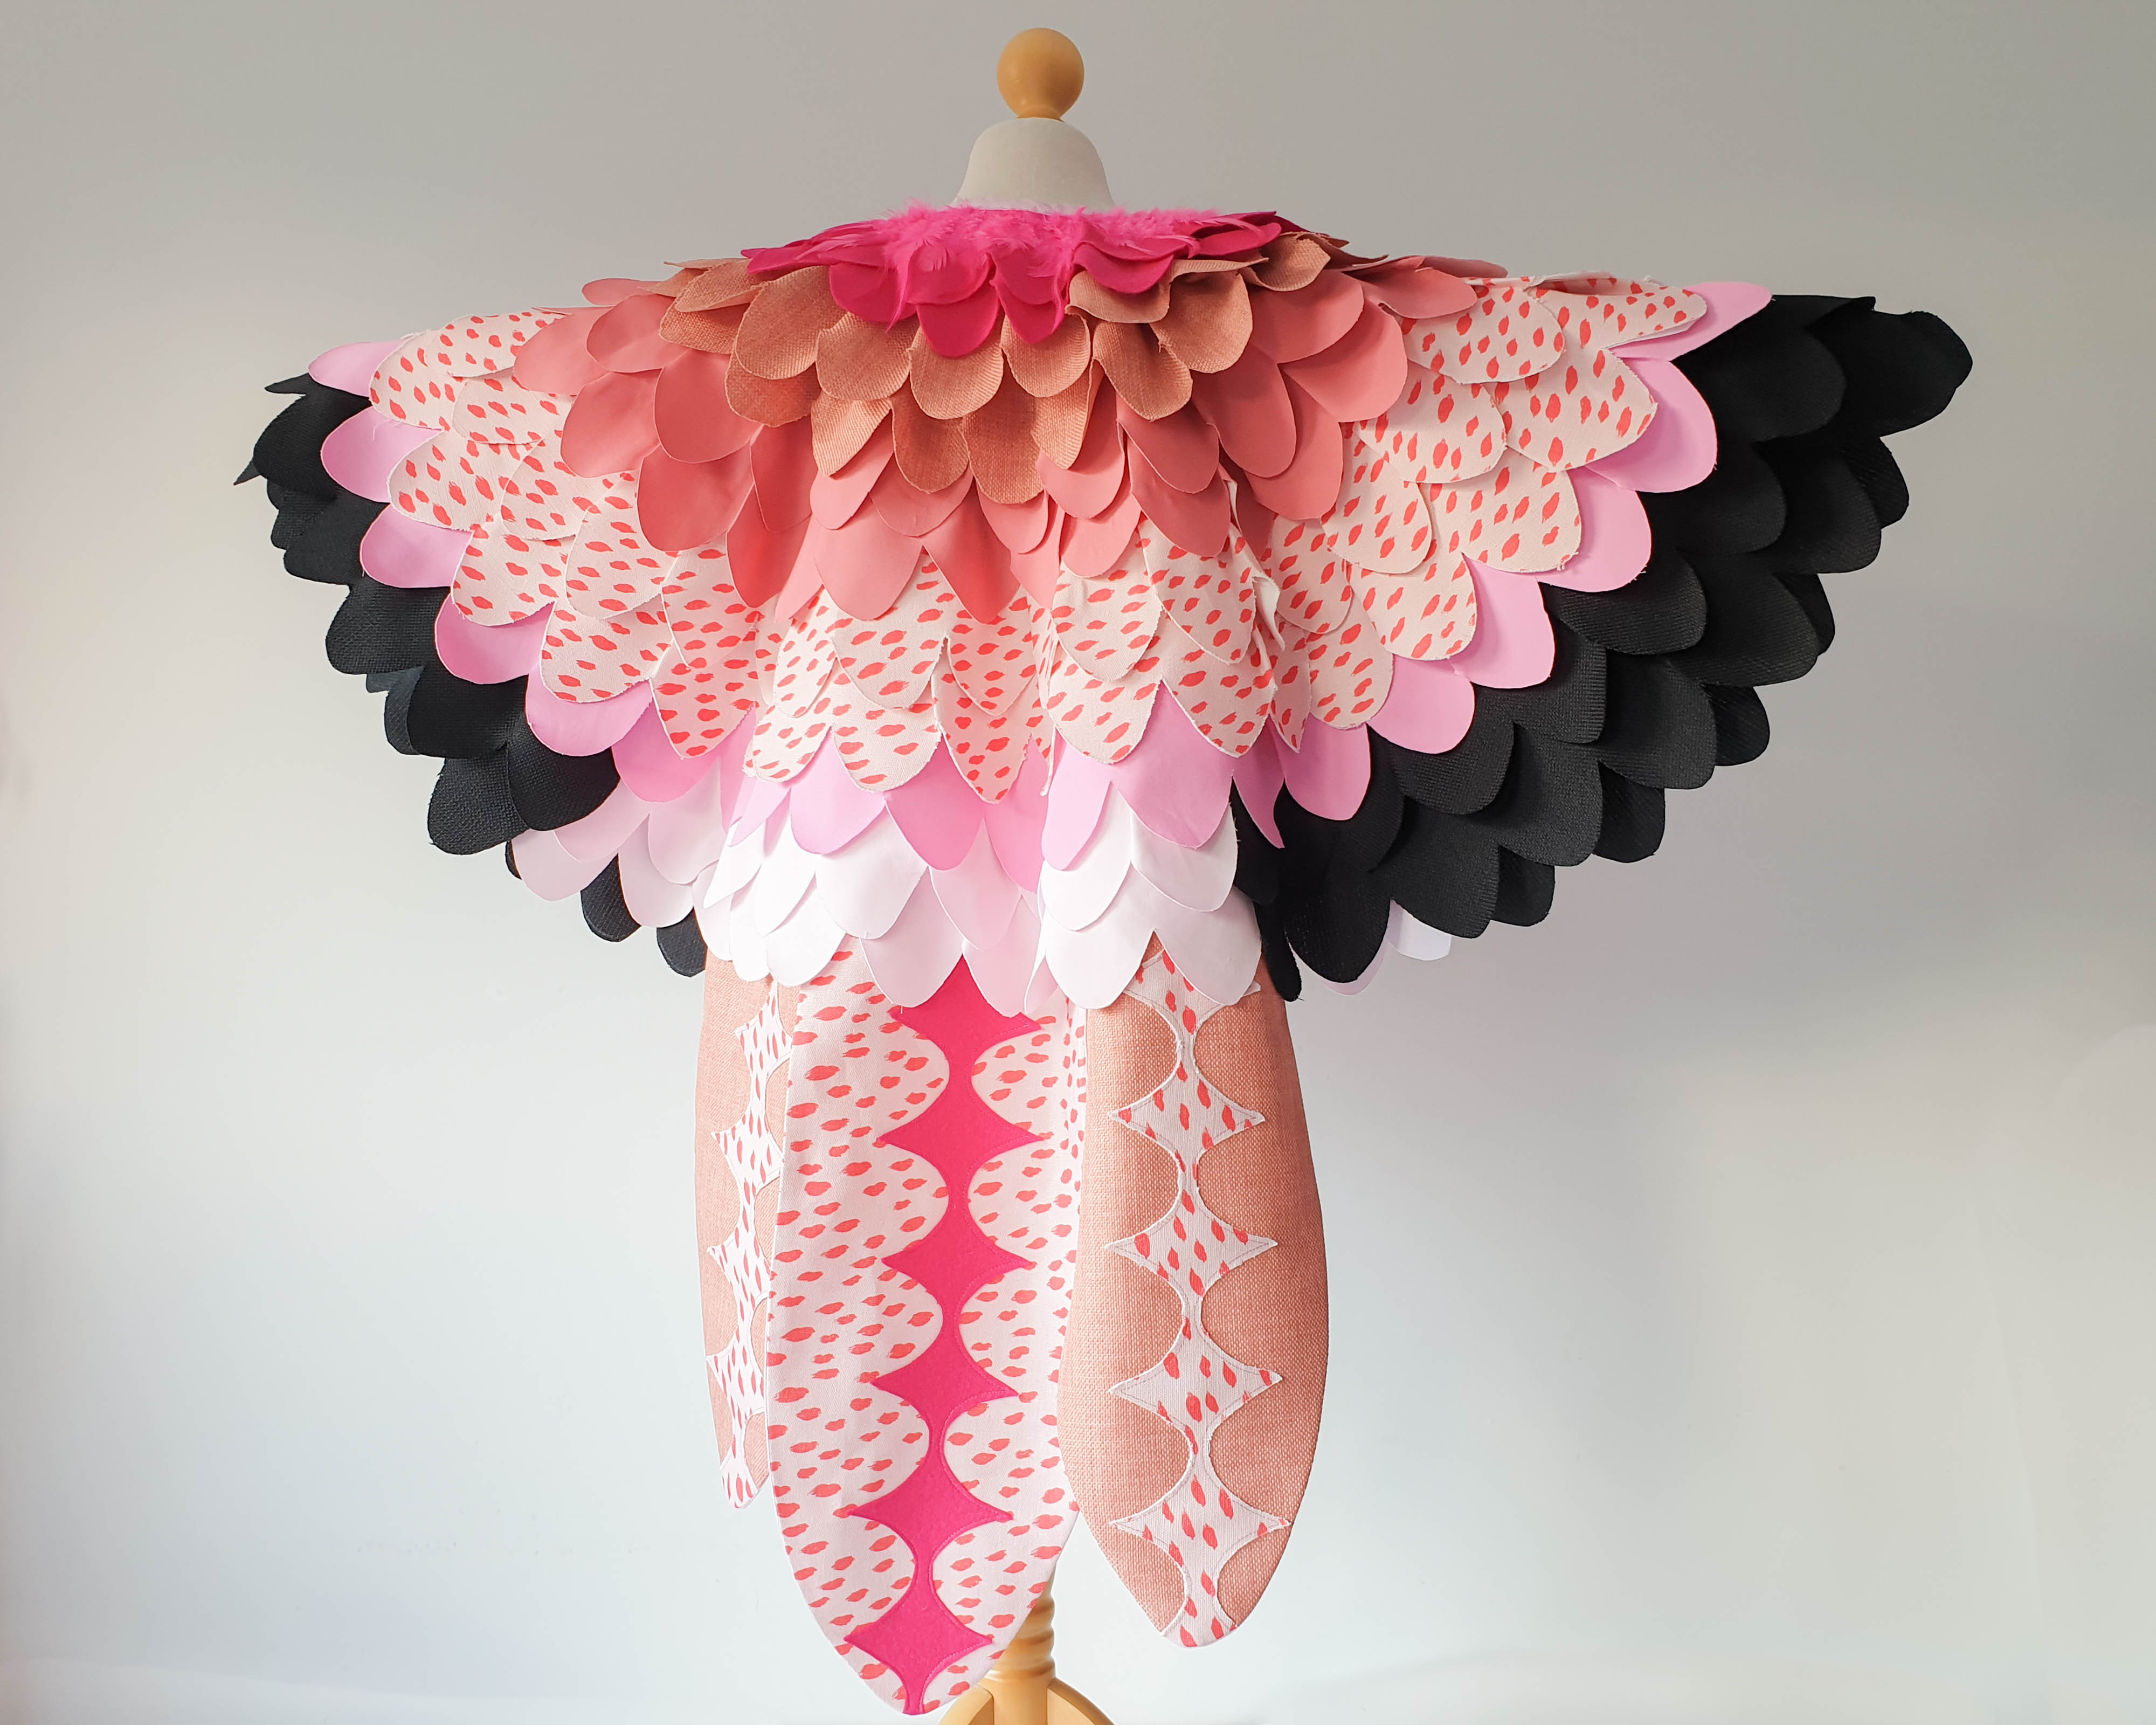 Flamingo bird coat for kids disguise